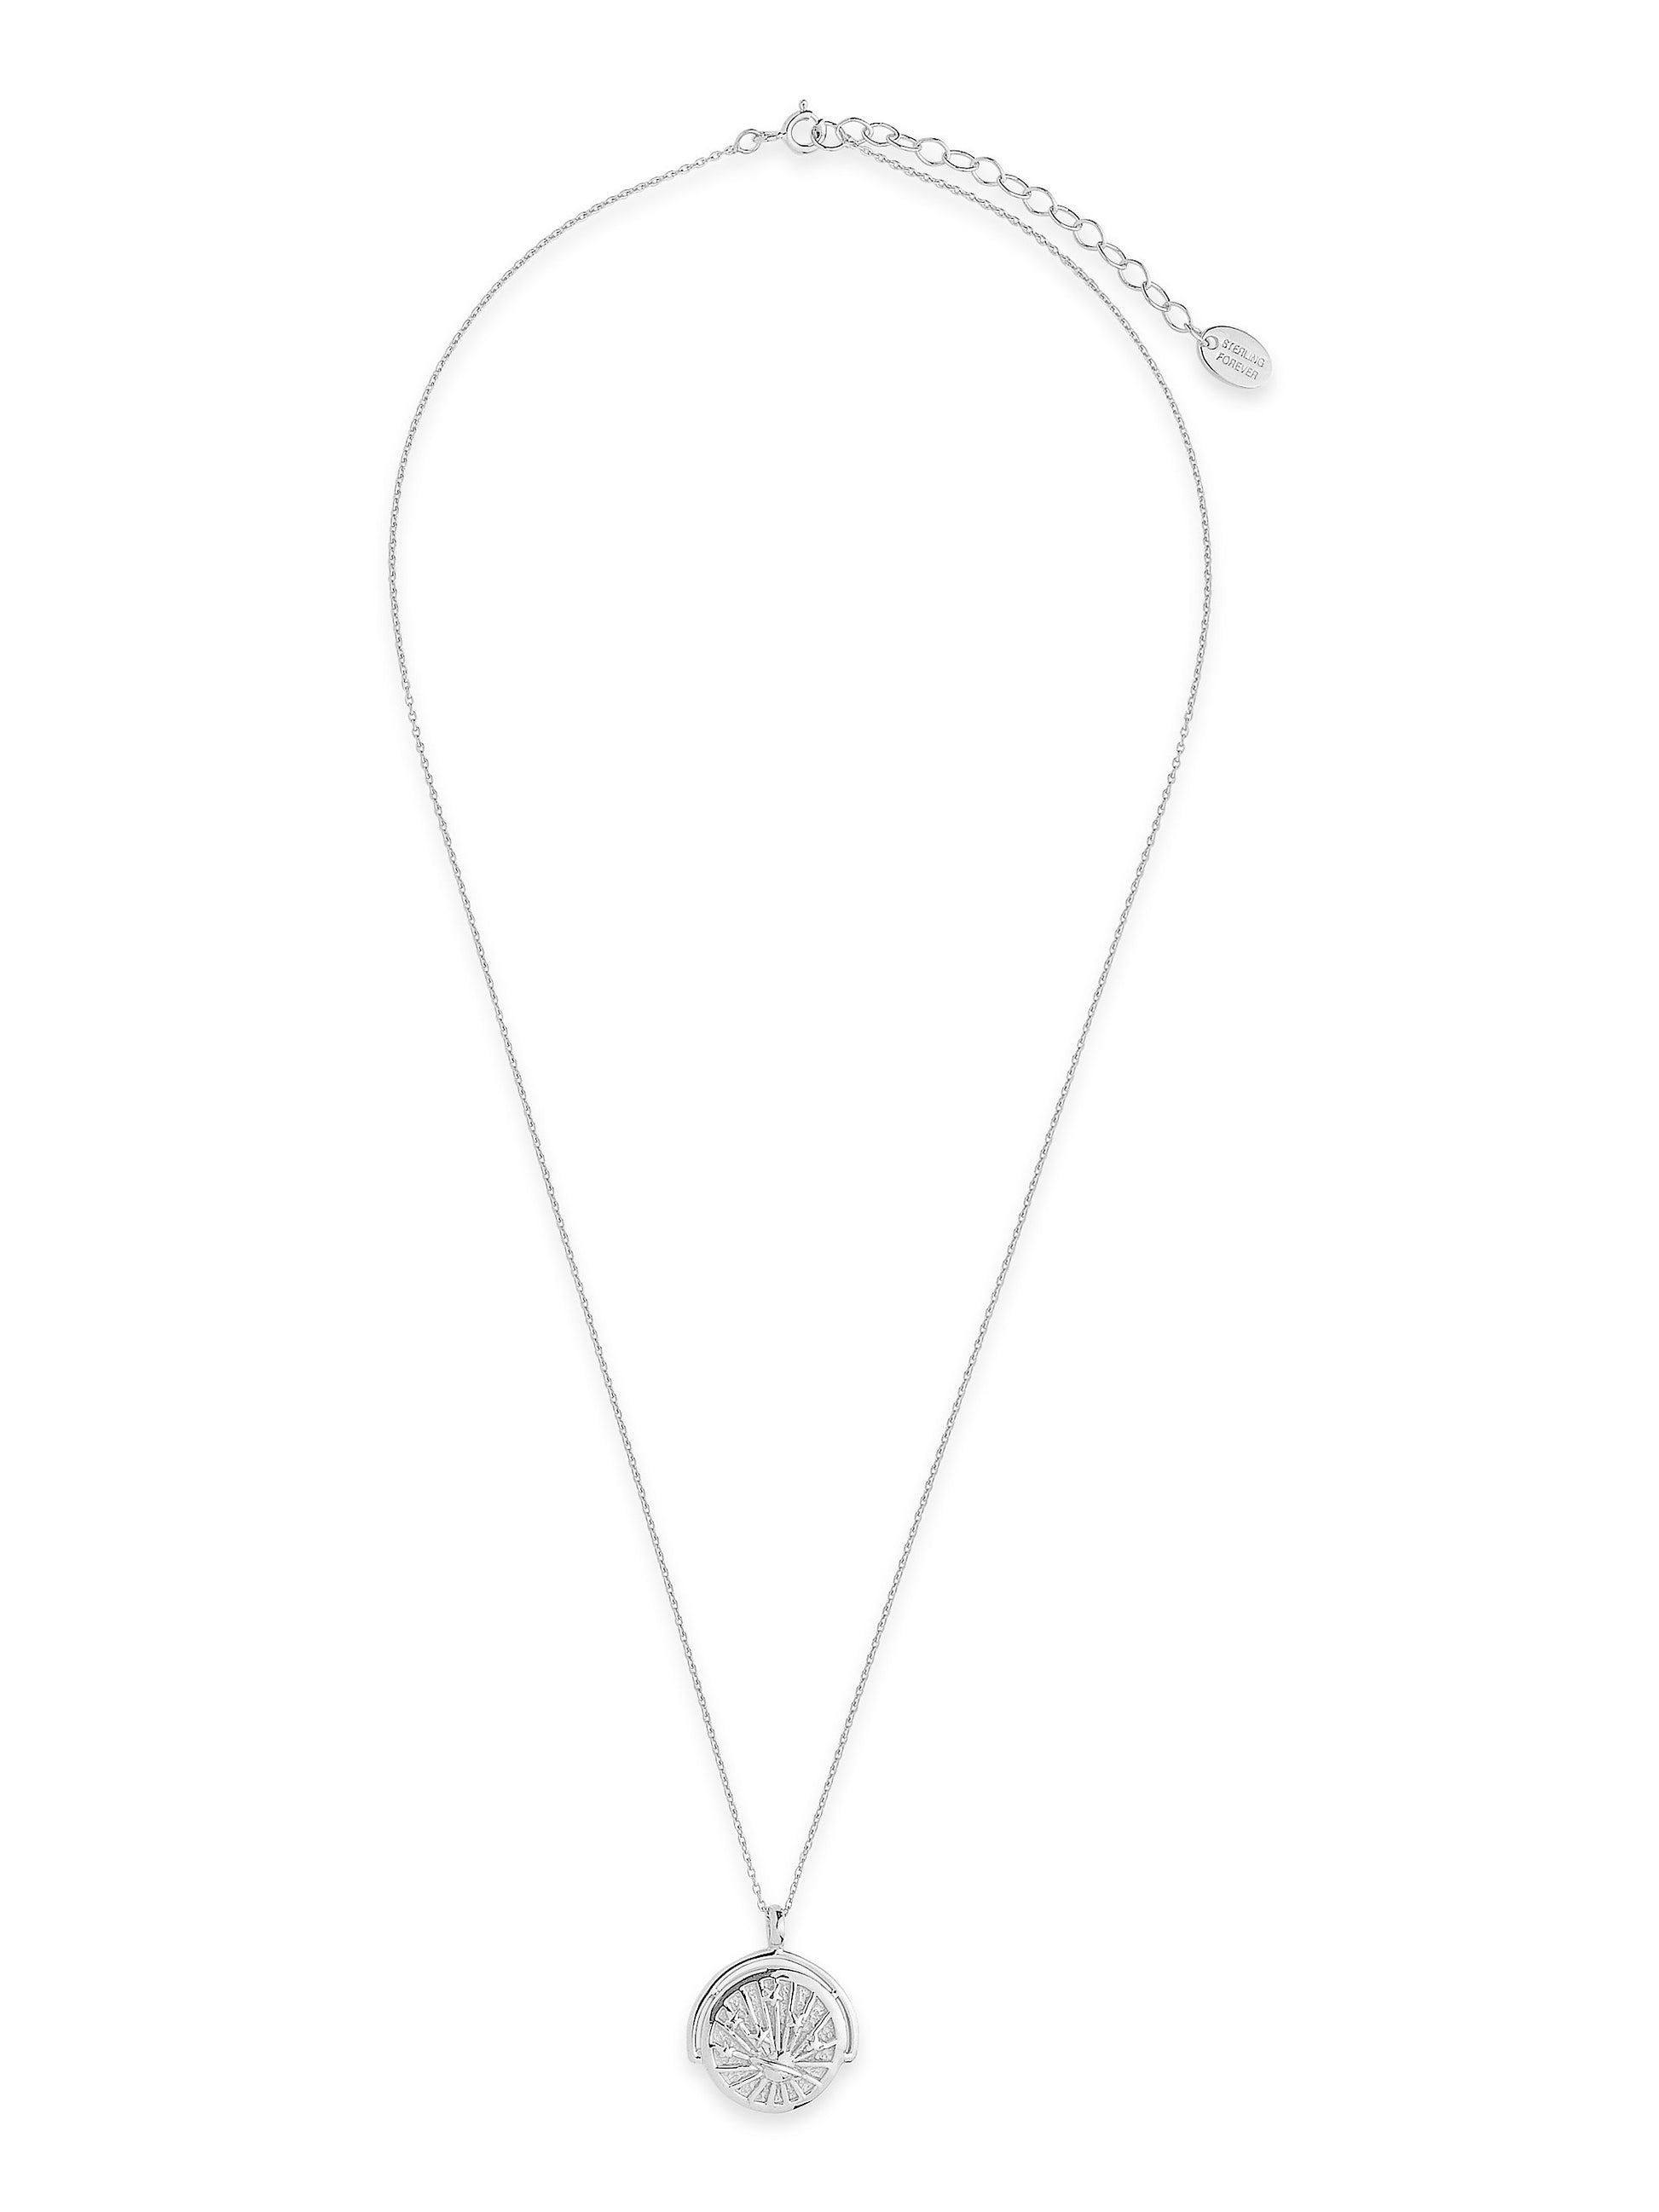 Celestial Rotation Pendant Necklace - Sterling Forever